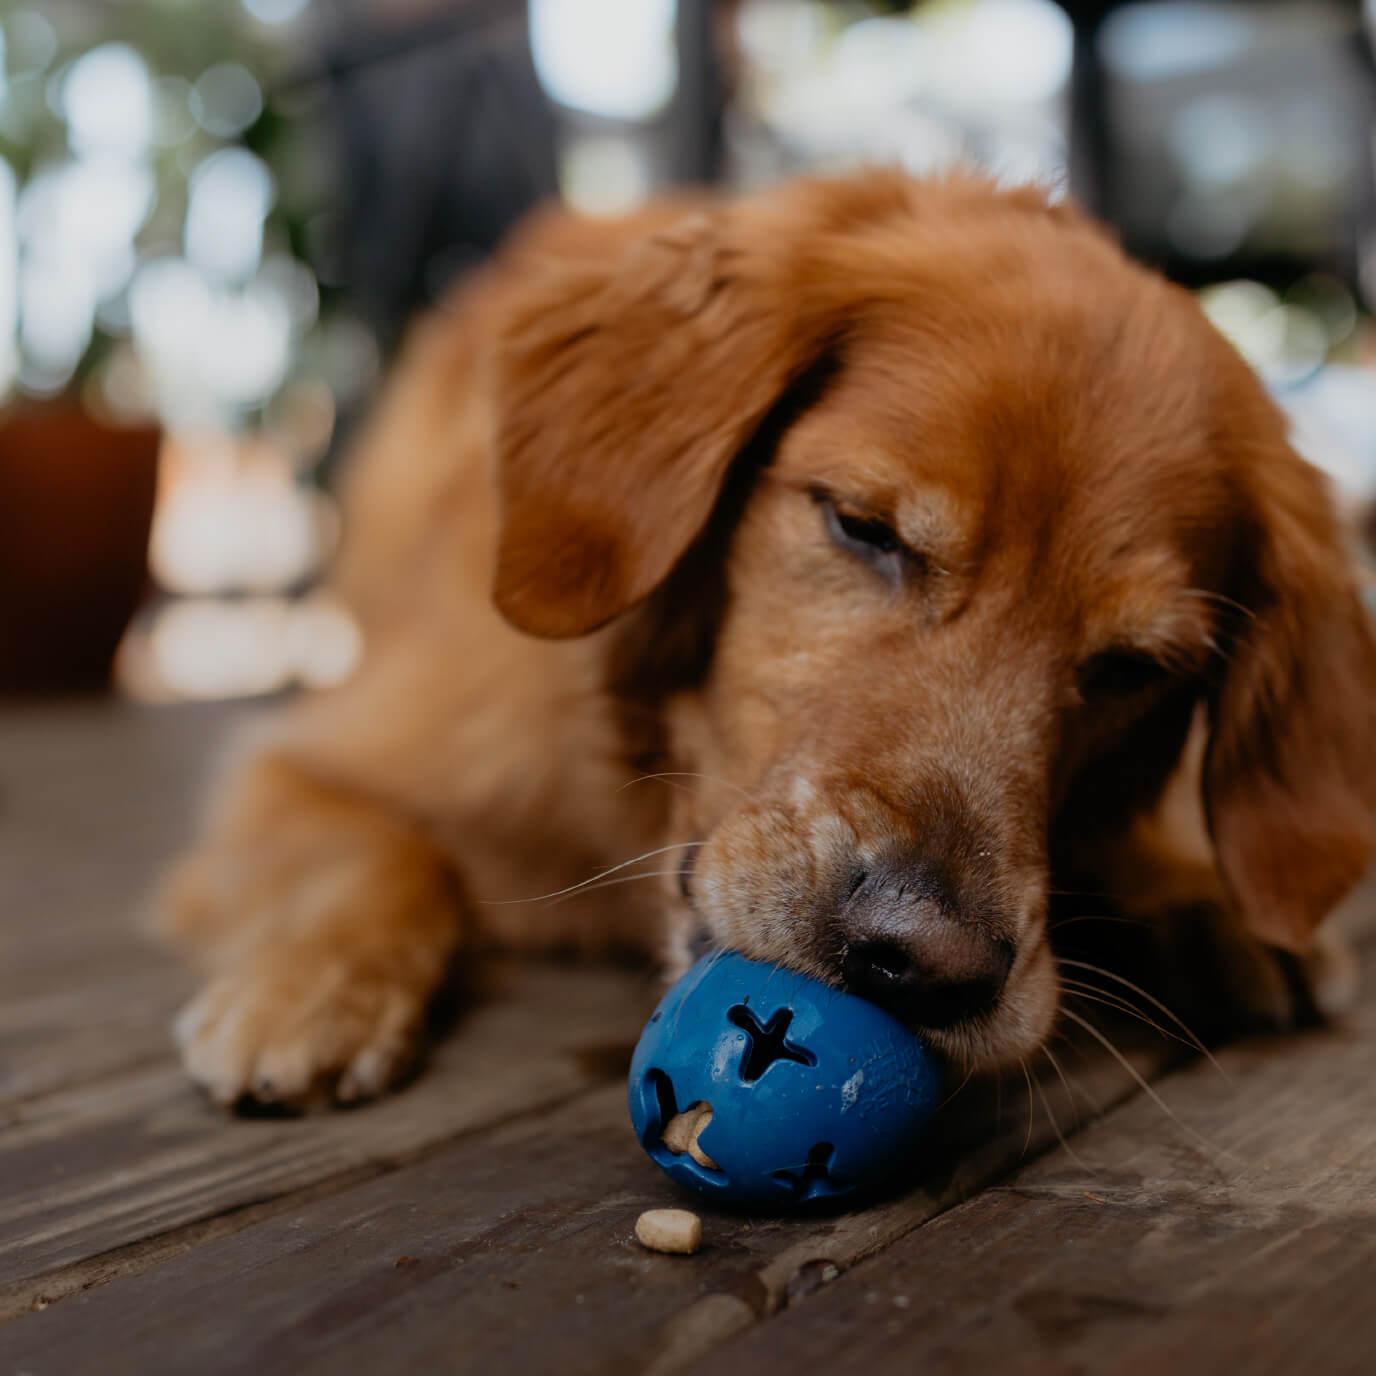 DIY Dog Food Toys - Boredom Busters - Environmental Enrichment